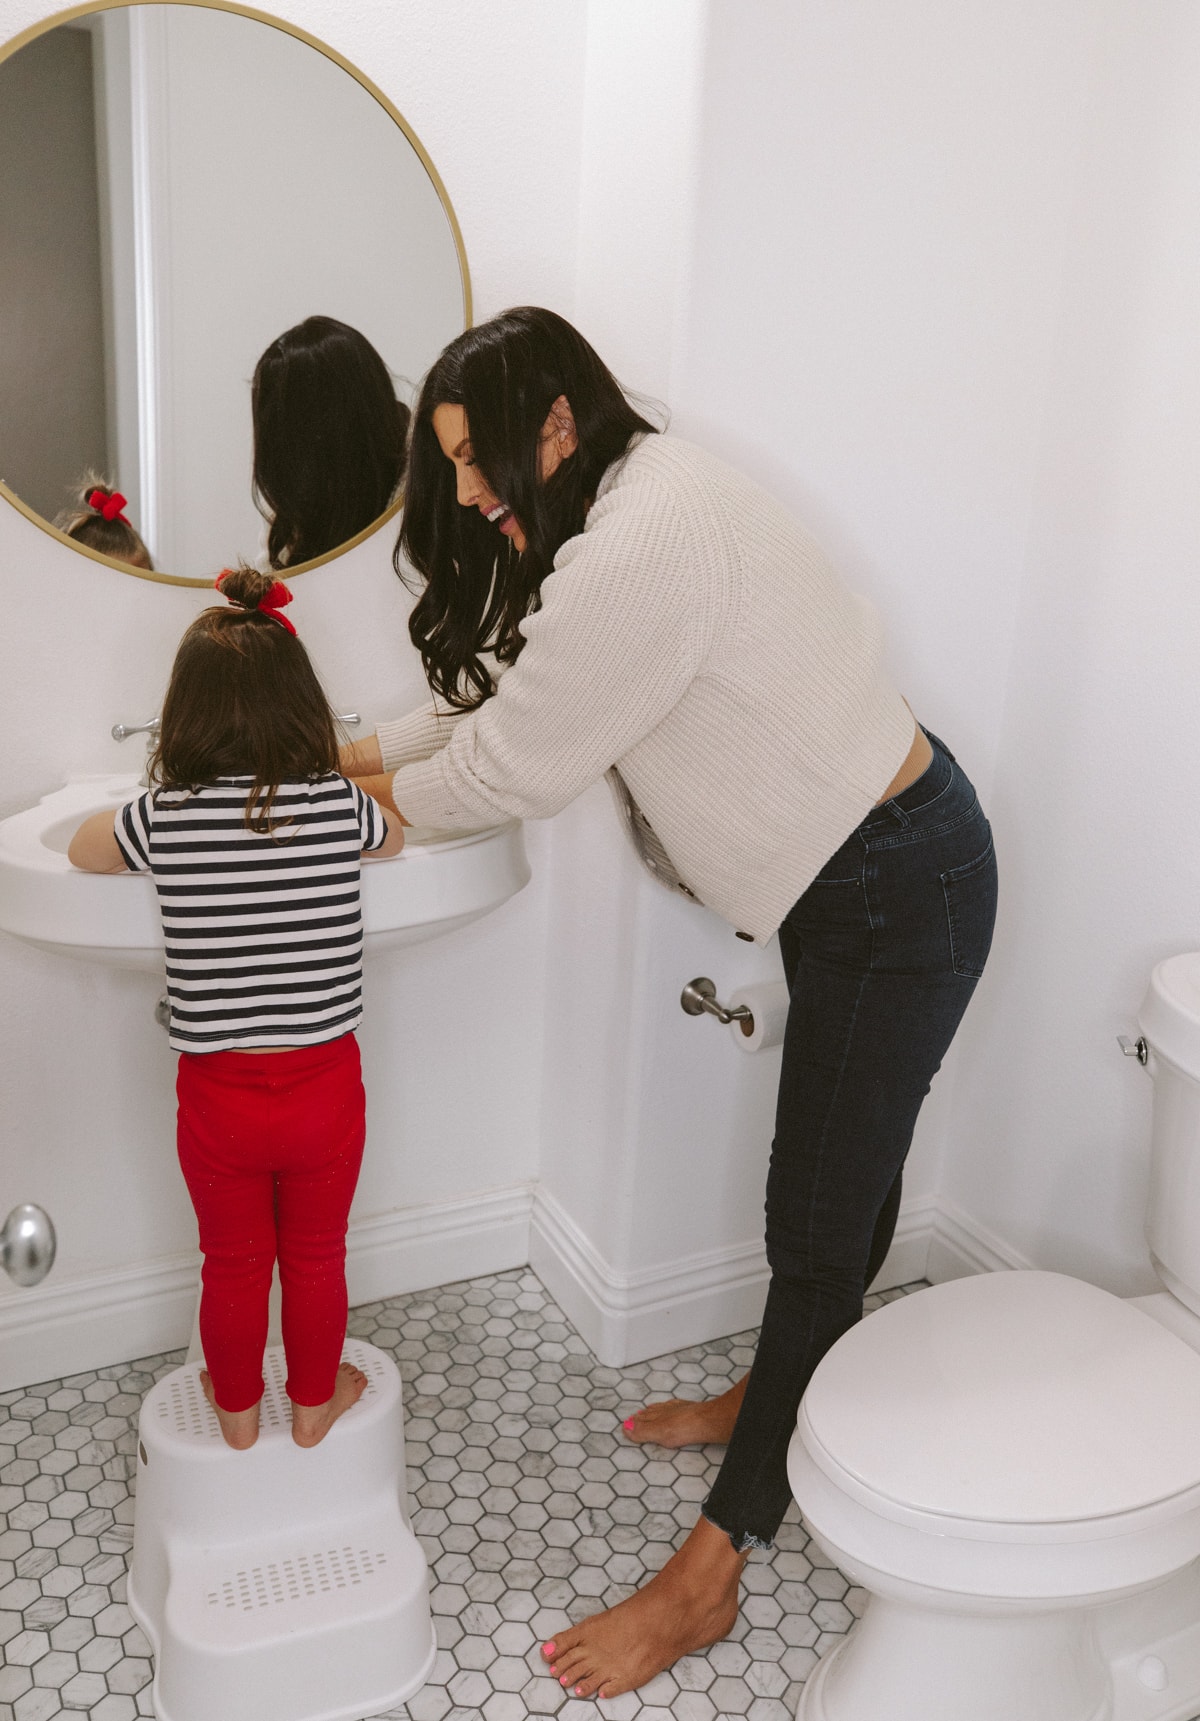 The best toilet-training lights for preschoolers 2021